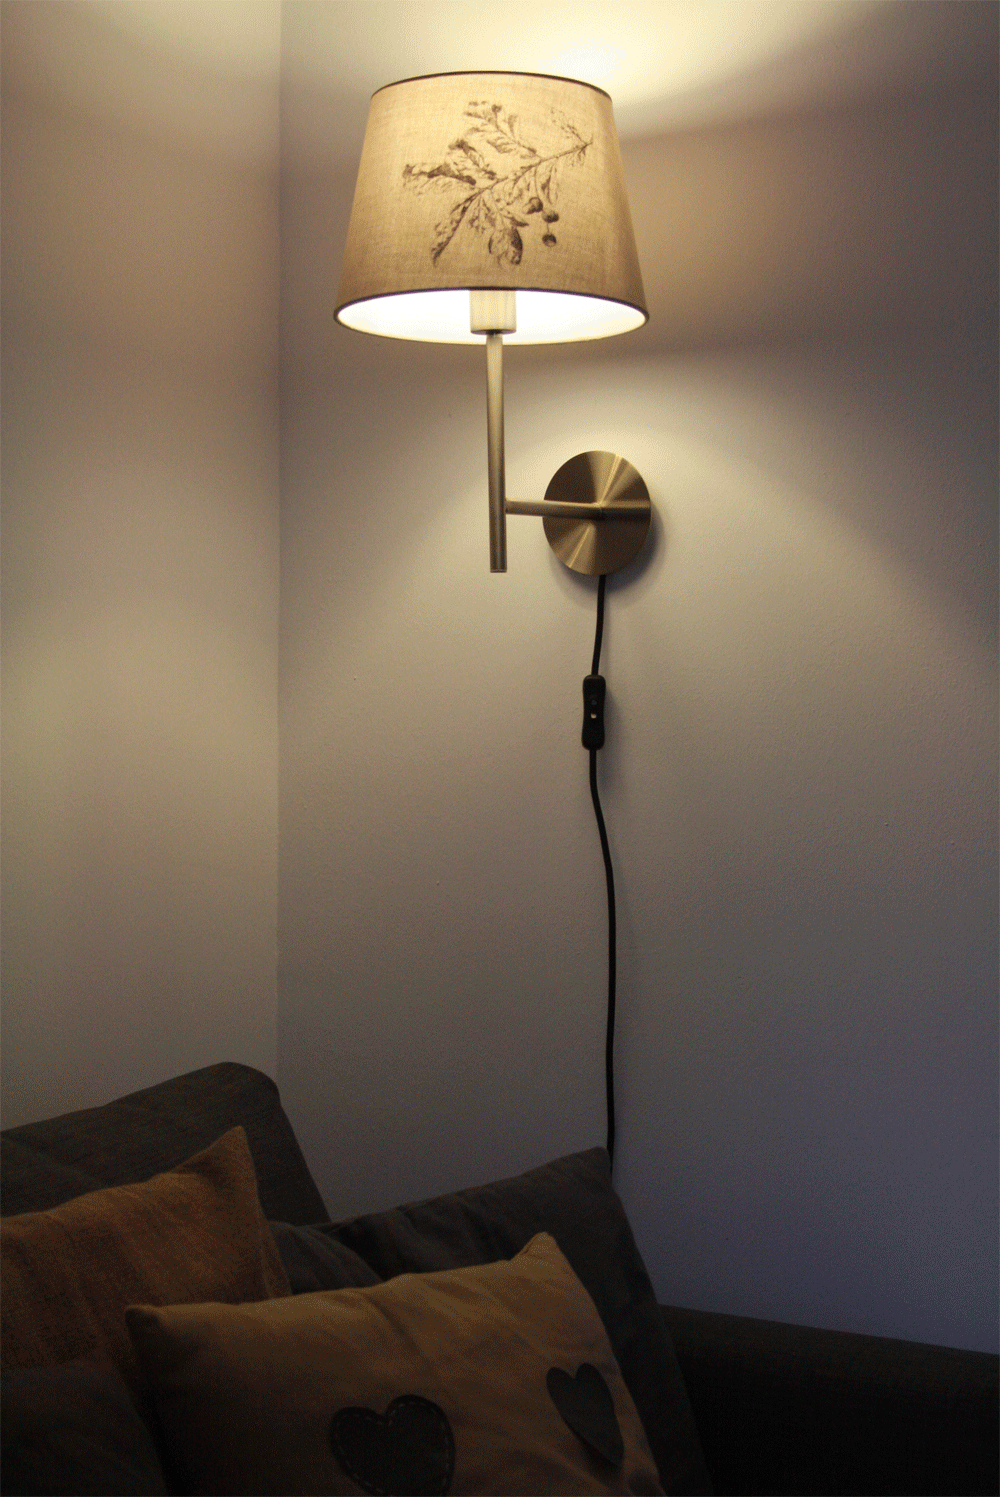 DIY IKEA HACK Transfertechnik Lampe vintage Eichhörnchen